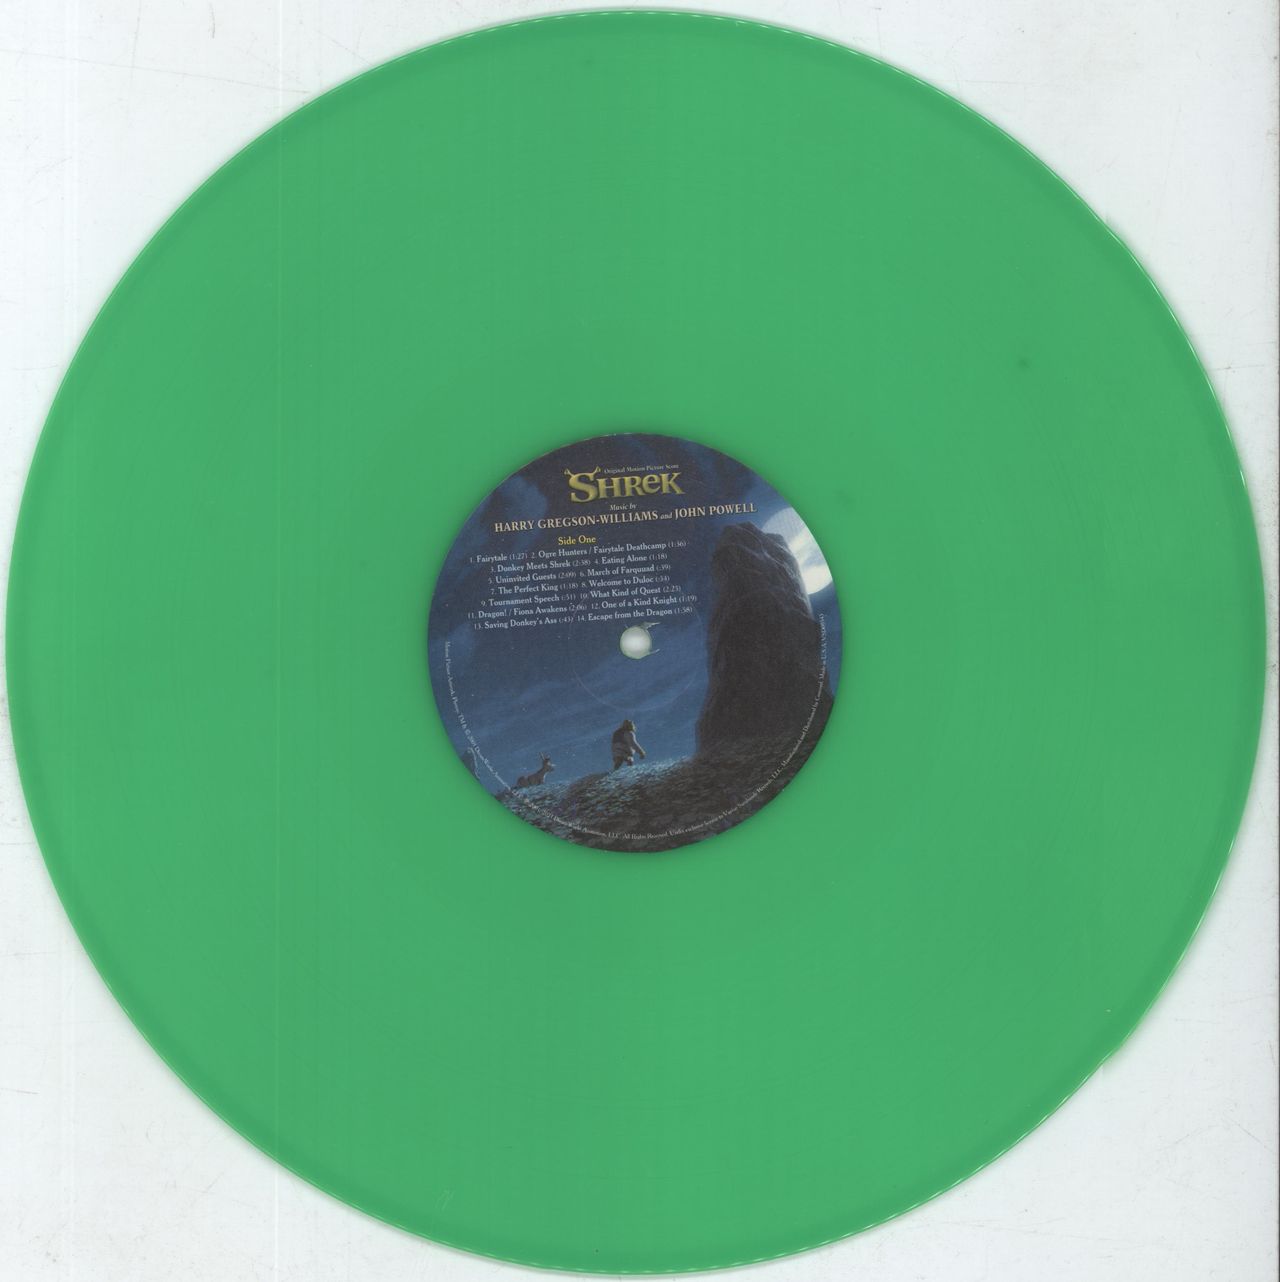 Original Soundtrack Shrek UK Vinyl LP —